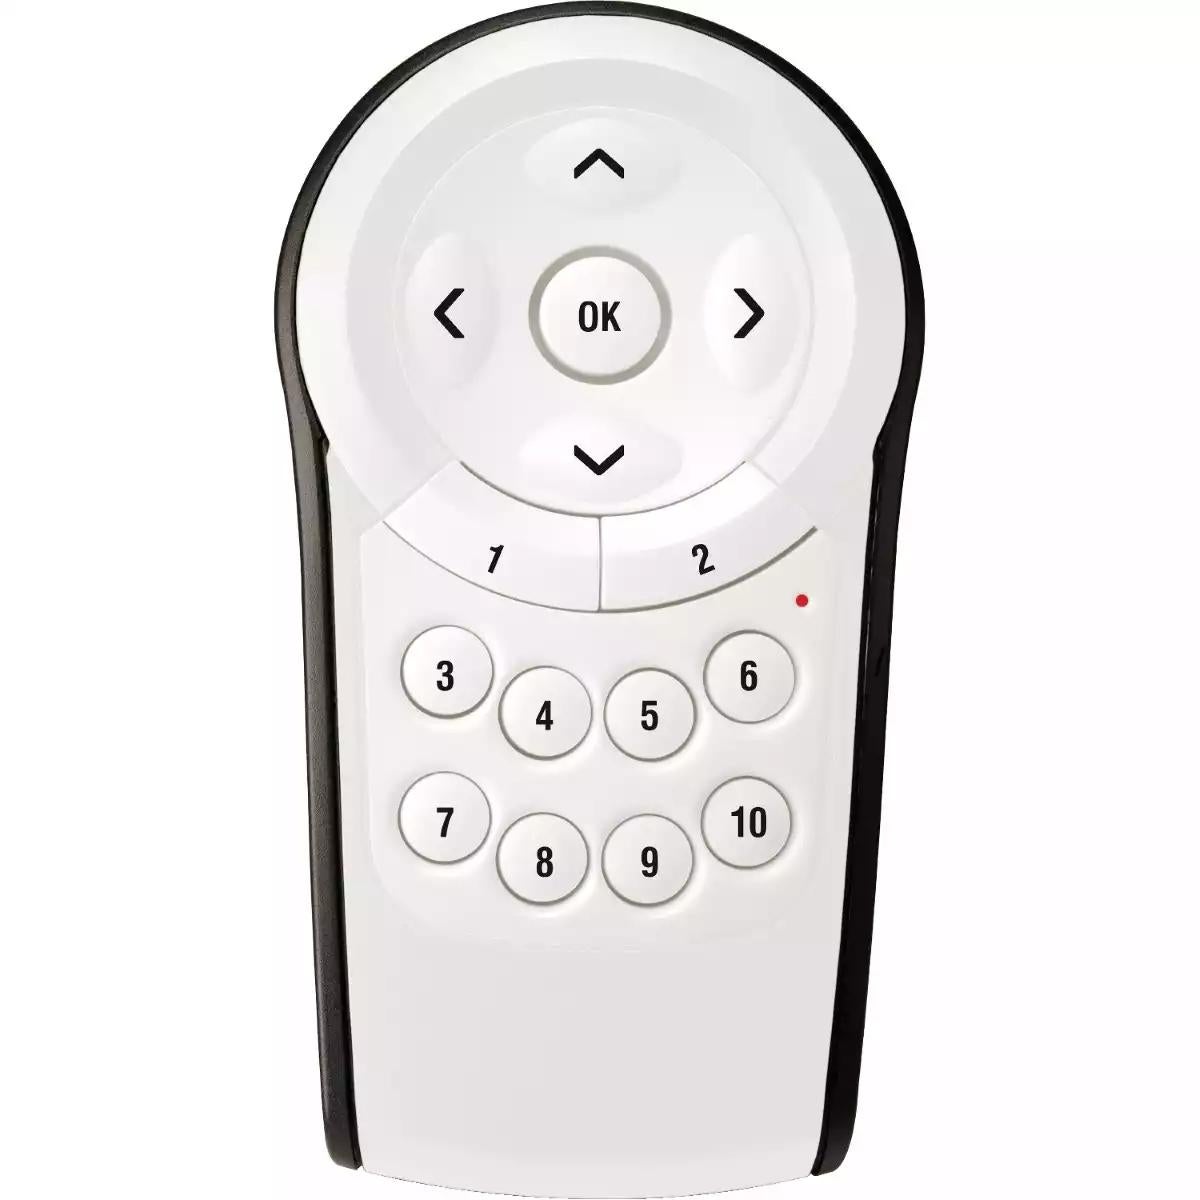 IR universal remote control